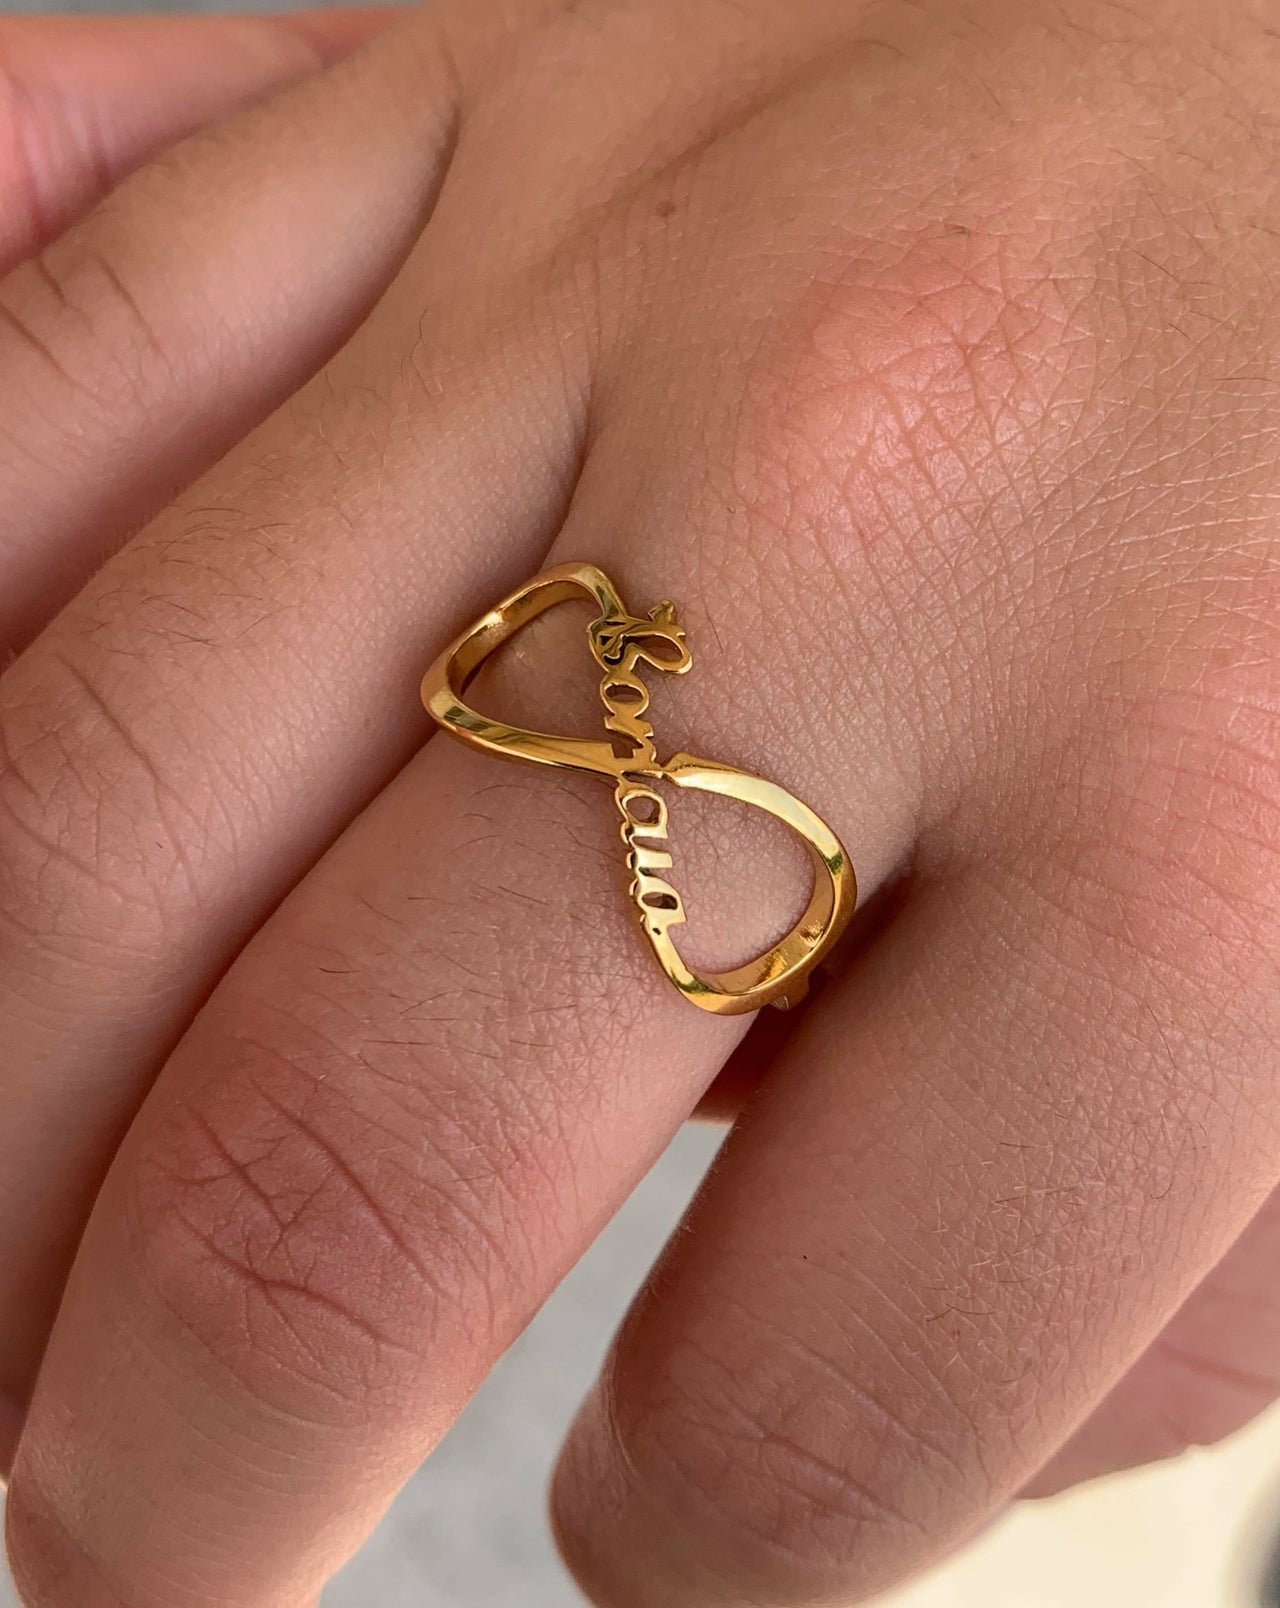 Boricua Gold Infinity Ring